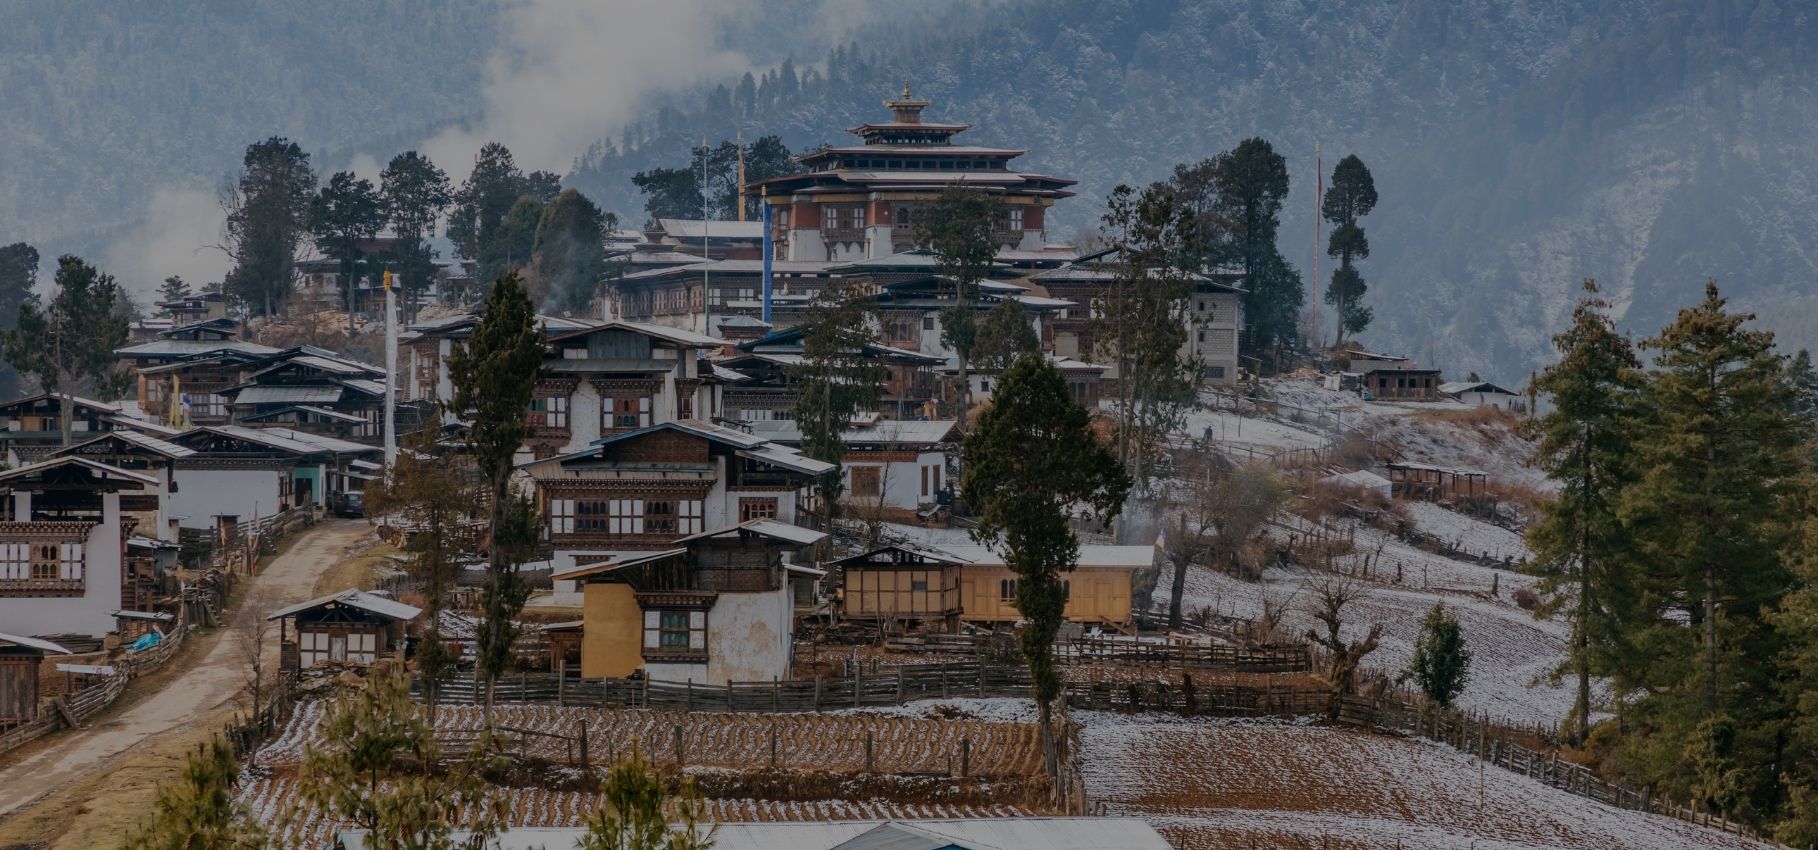 Visiting Phobjikha Valley in Bhutan